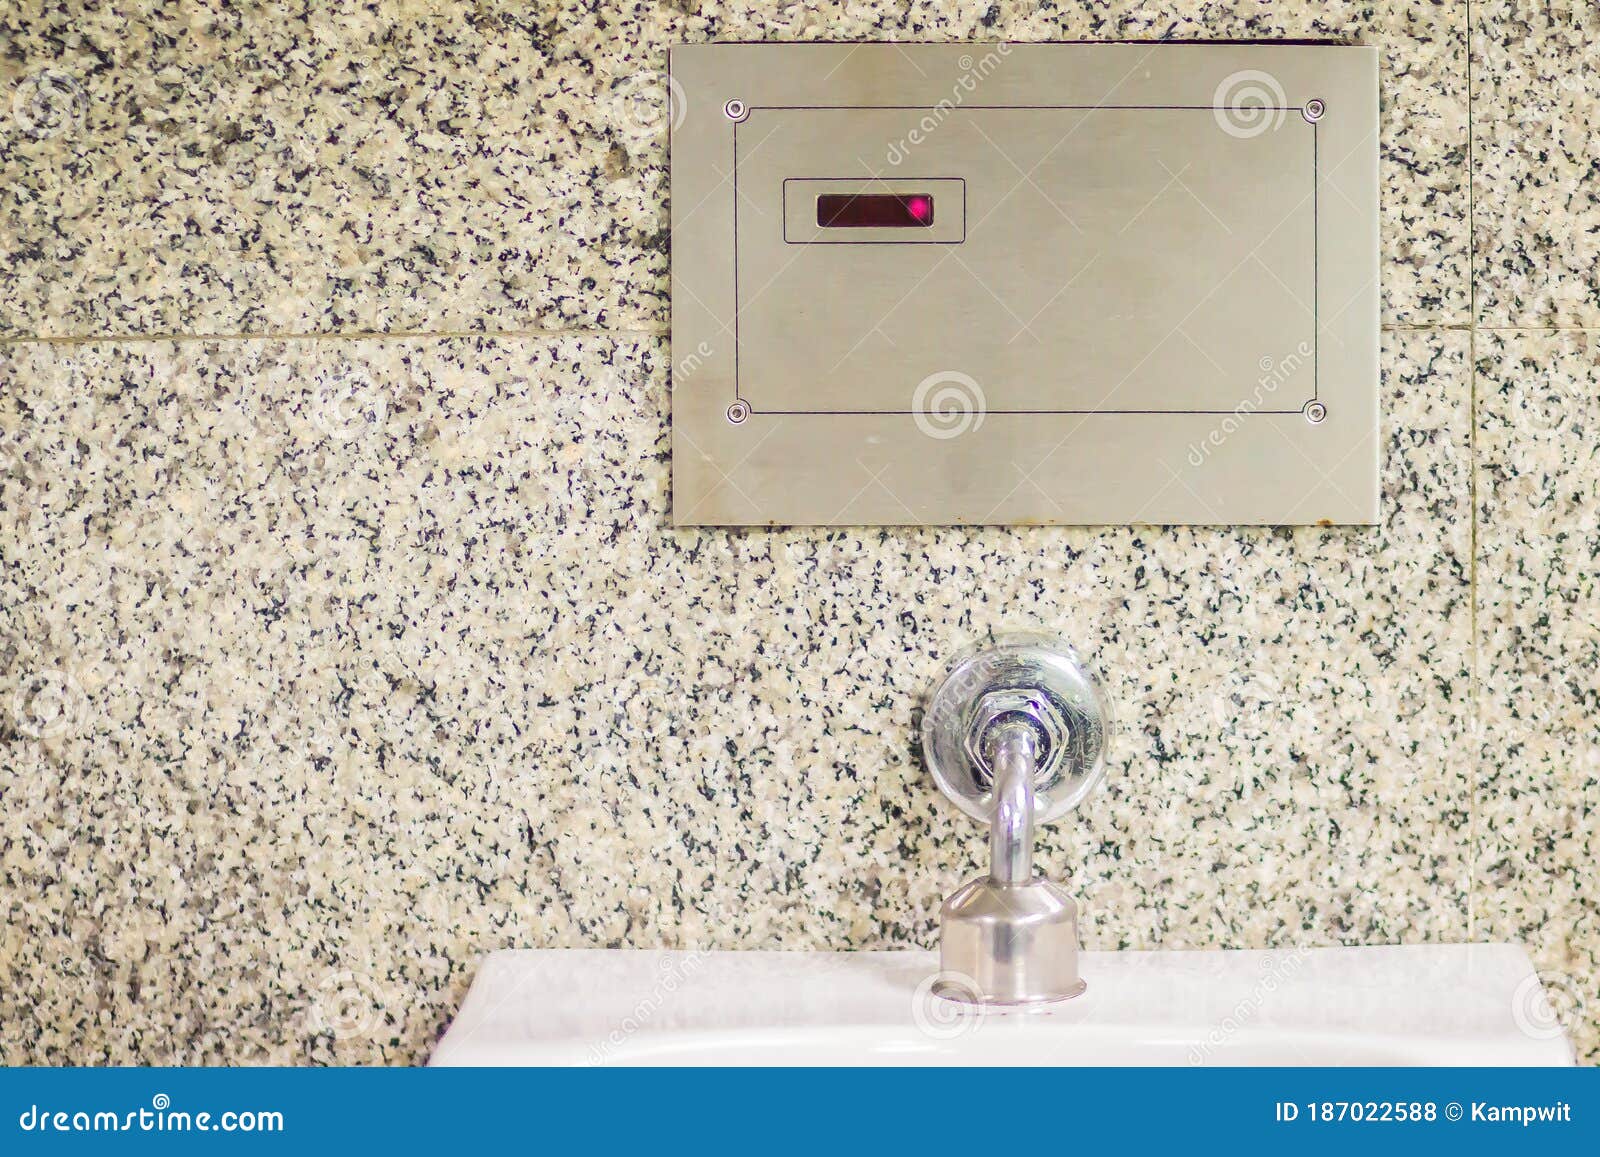 automatic infrared urinal sensor. urinal inductive toilet flush valve